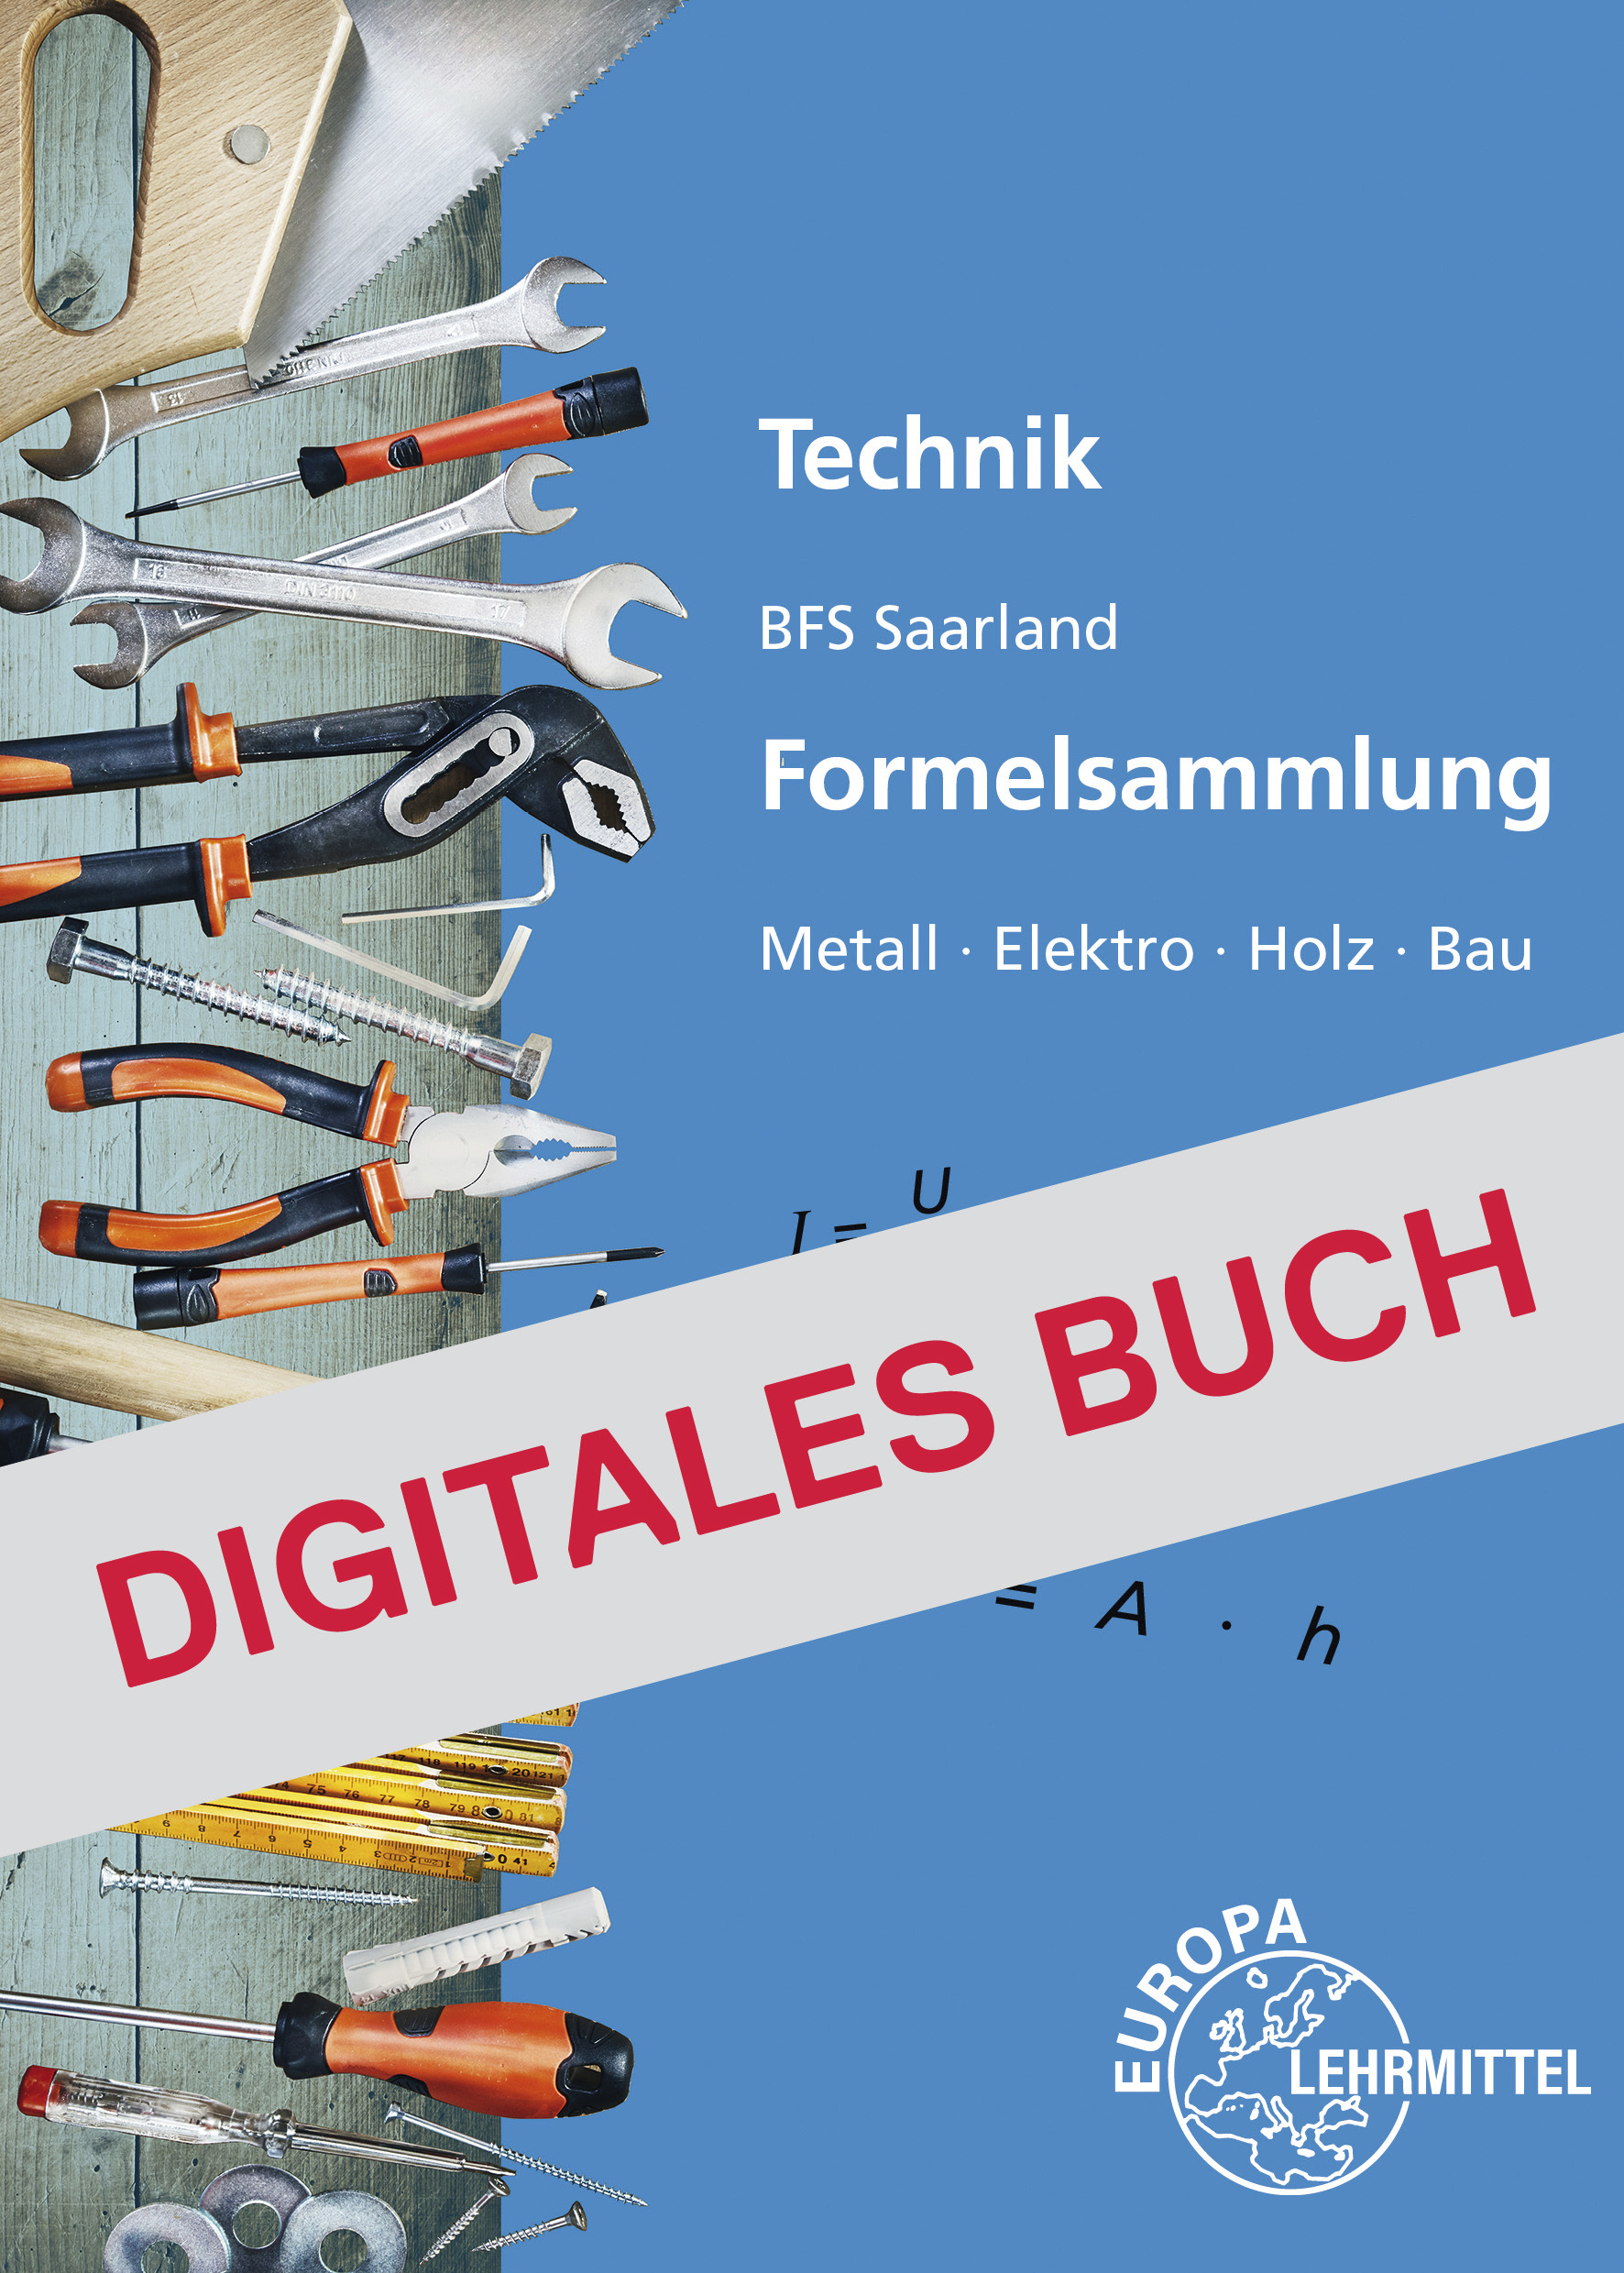 Technik BFS Saarland Formelsammlung Metall, Elektro, Holz, Bau -  Digitales Buch